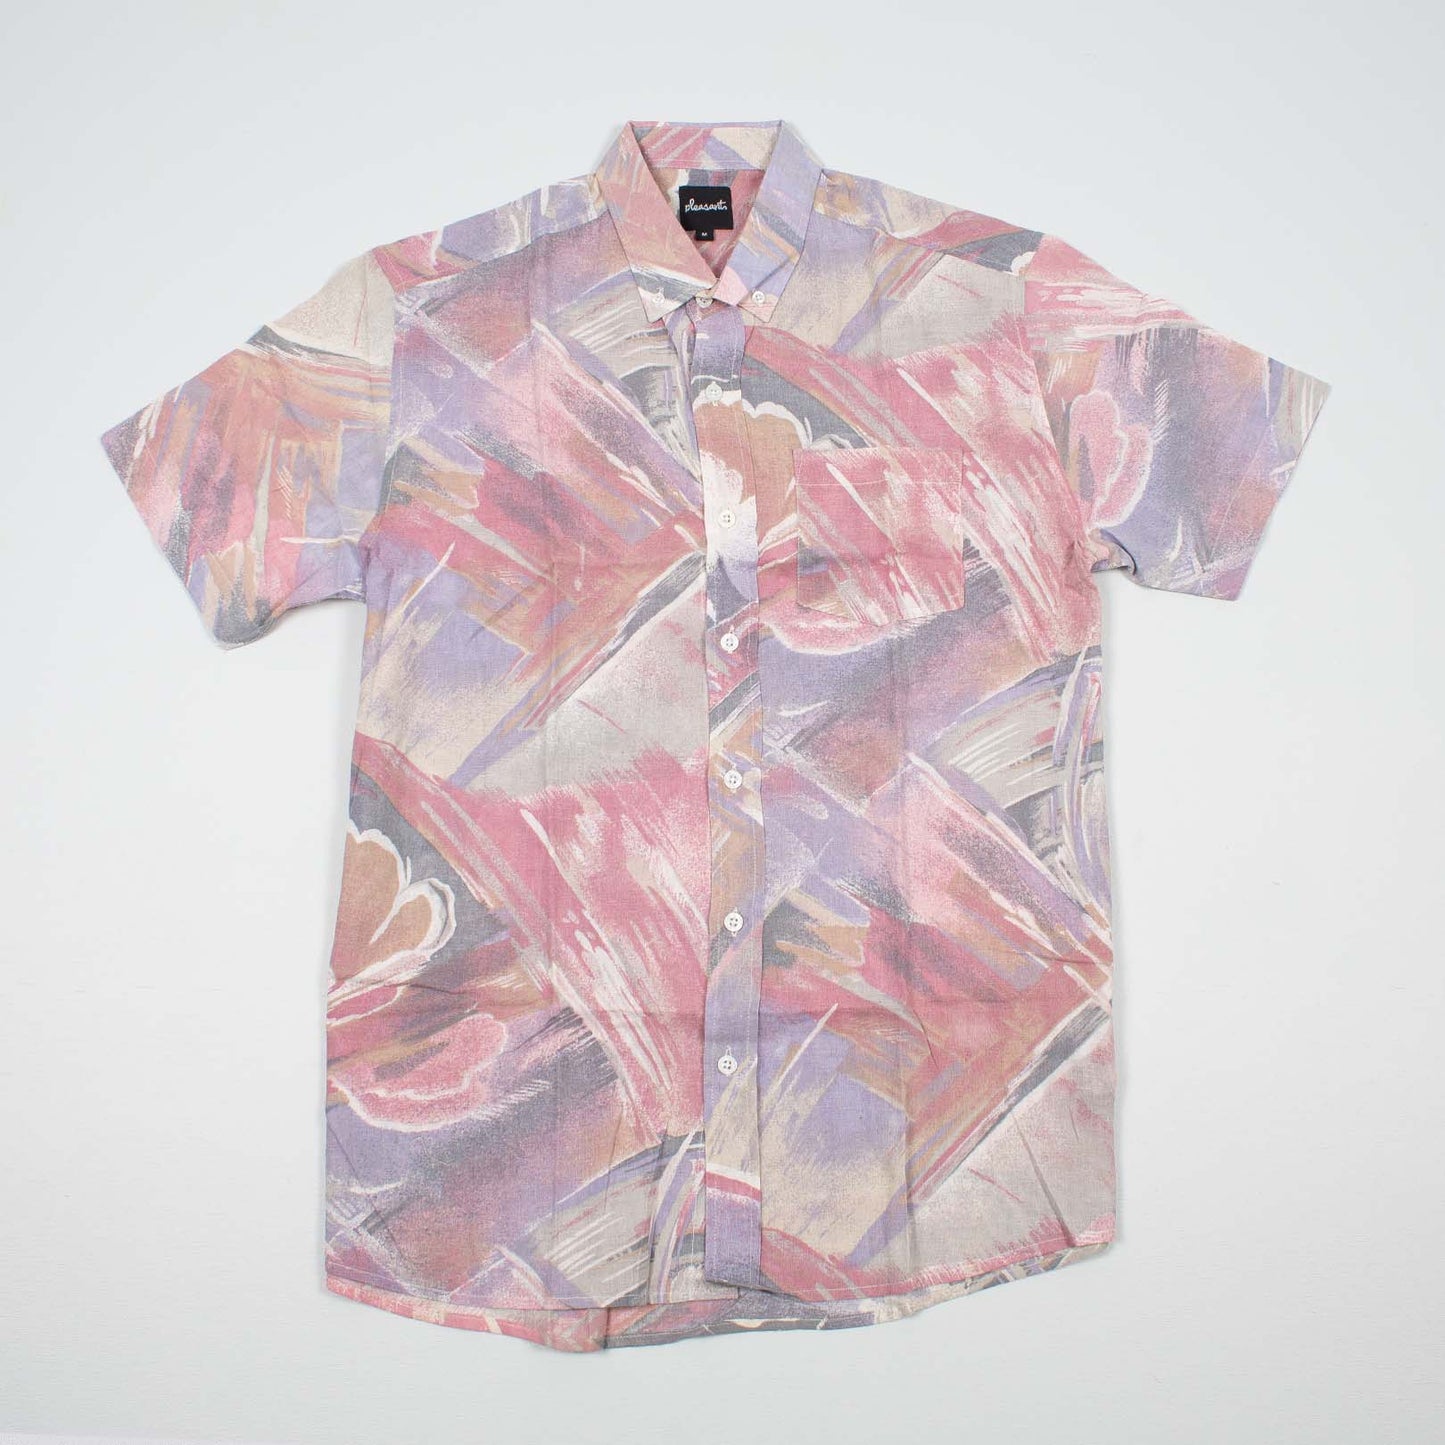 Abstract pastel upcycled shirt